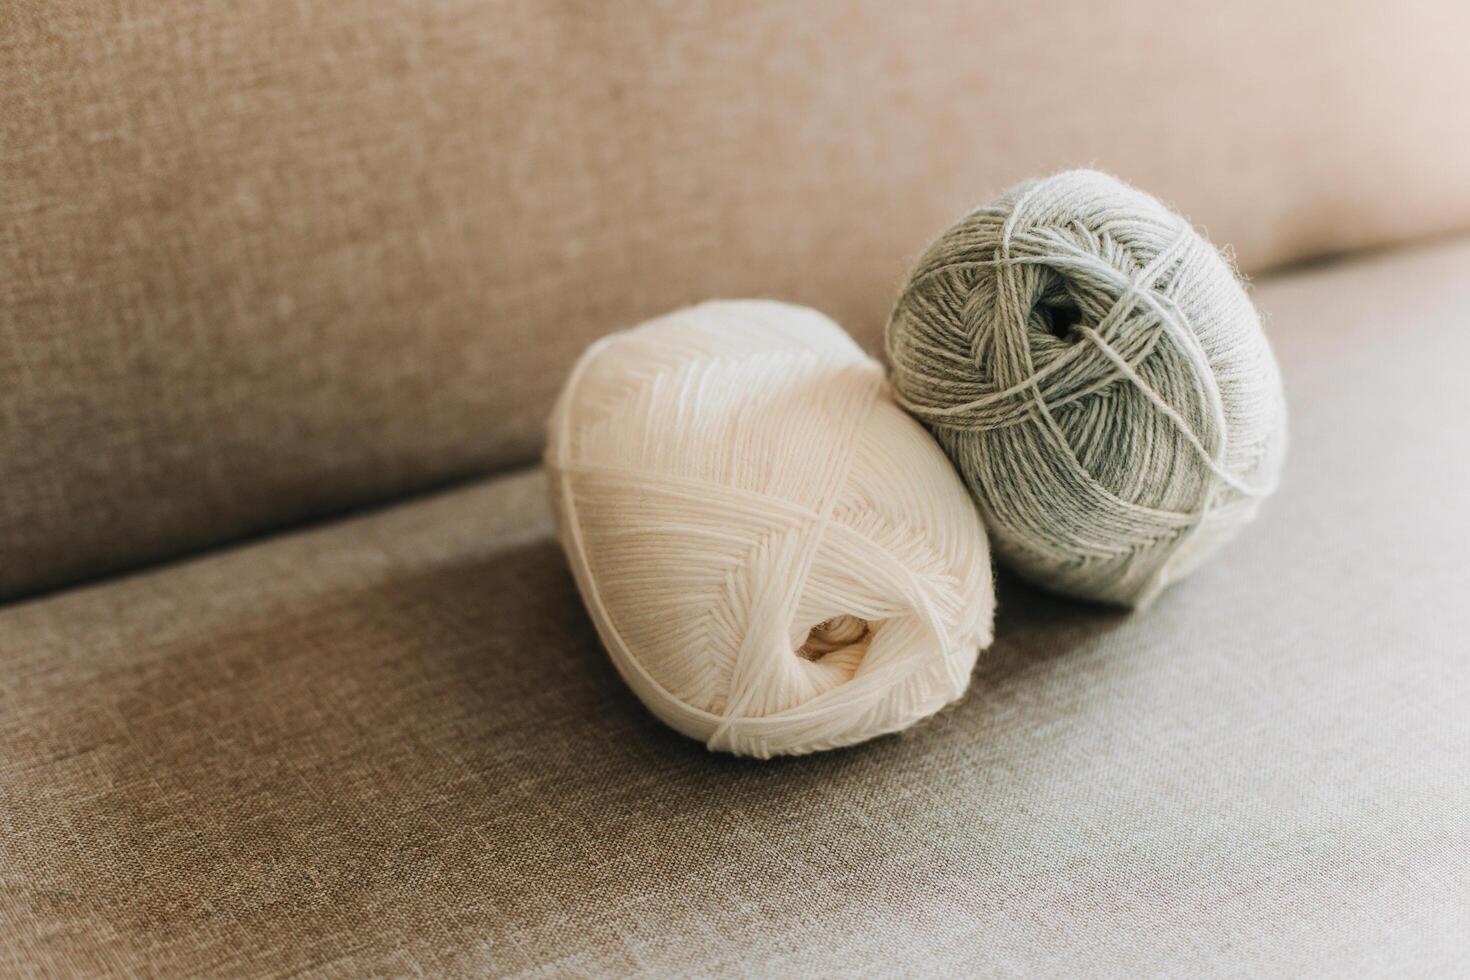 madejas de de lana hilo para mano tejido de punto. concepto para hecho a mano. foto